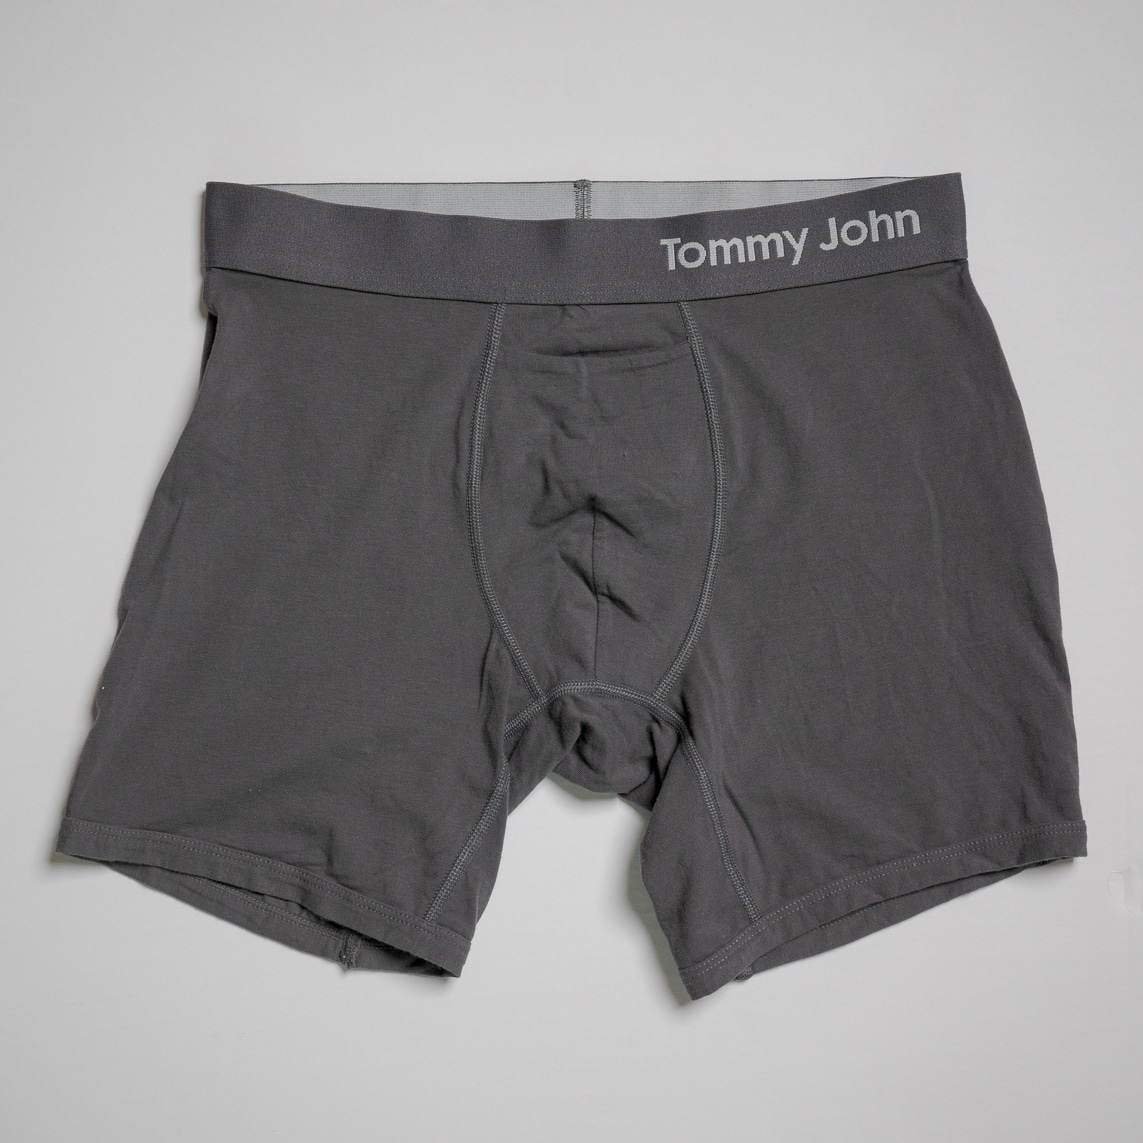 Tommy John Cool Cotton Boxer Briefs